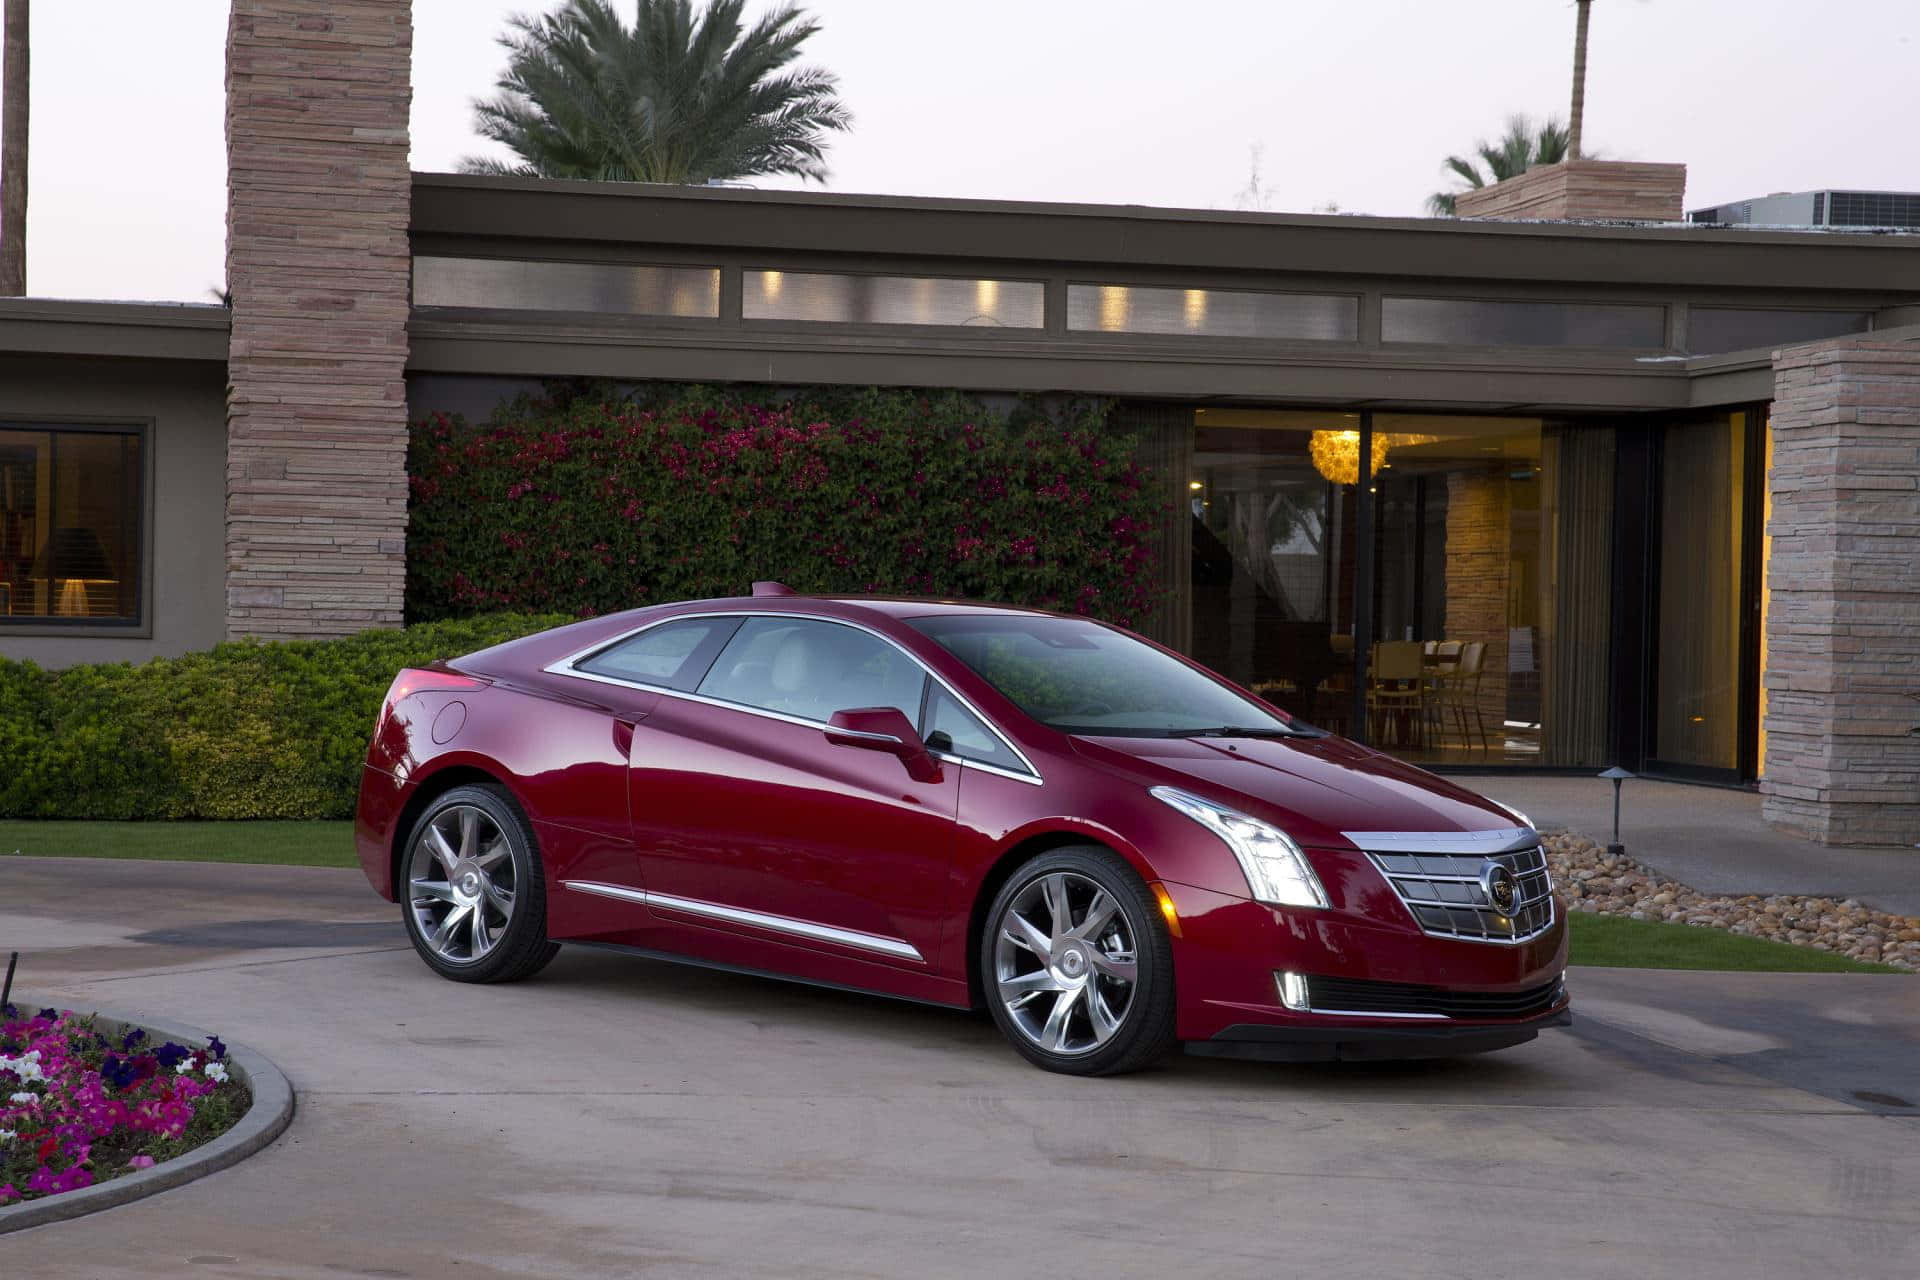 Sleek Luxury Electric Vehicle - The Cadillac ELR Wallpaper